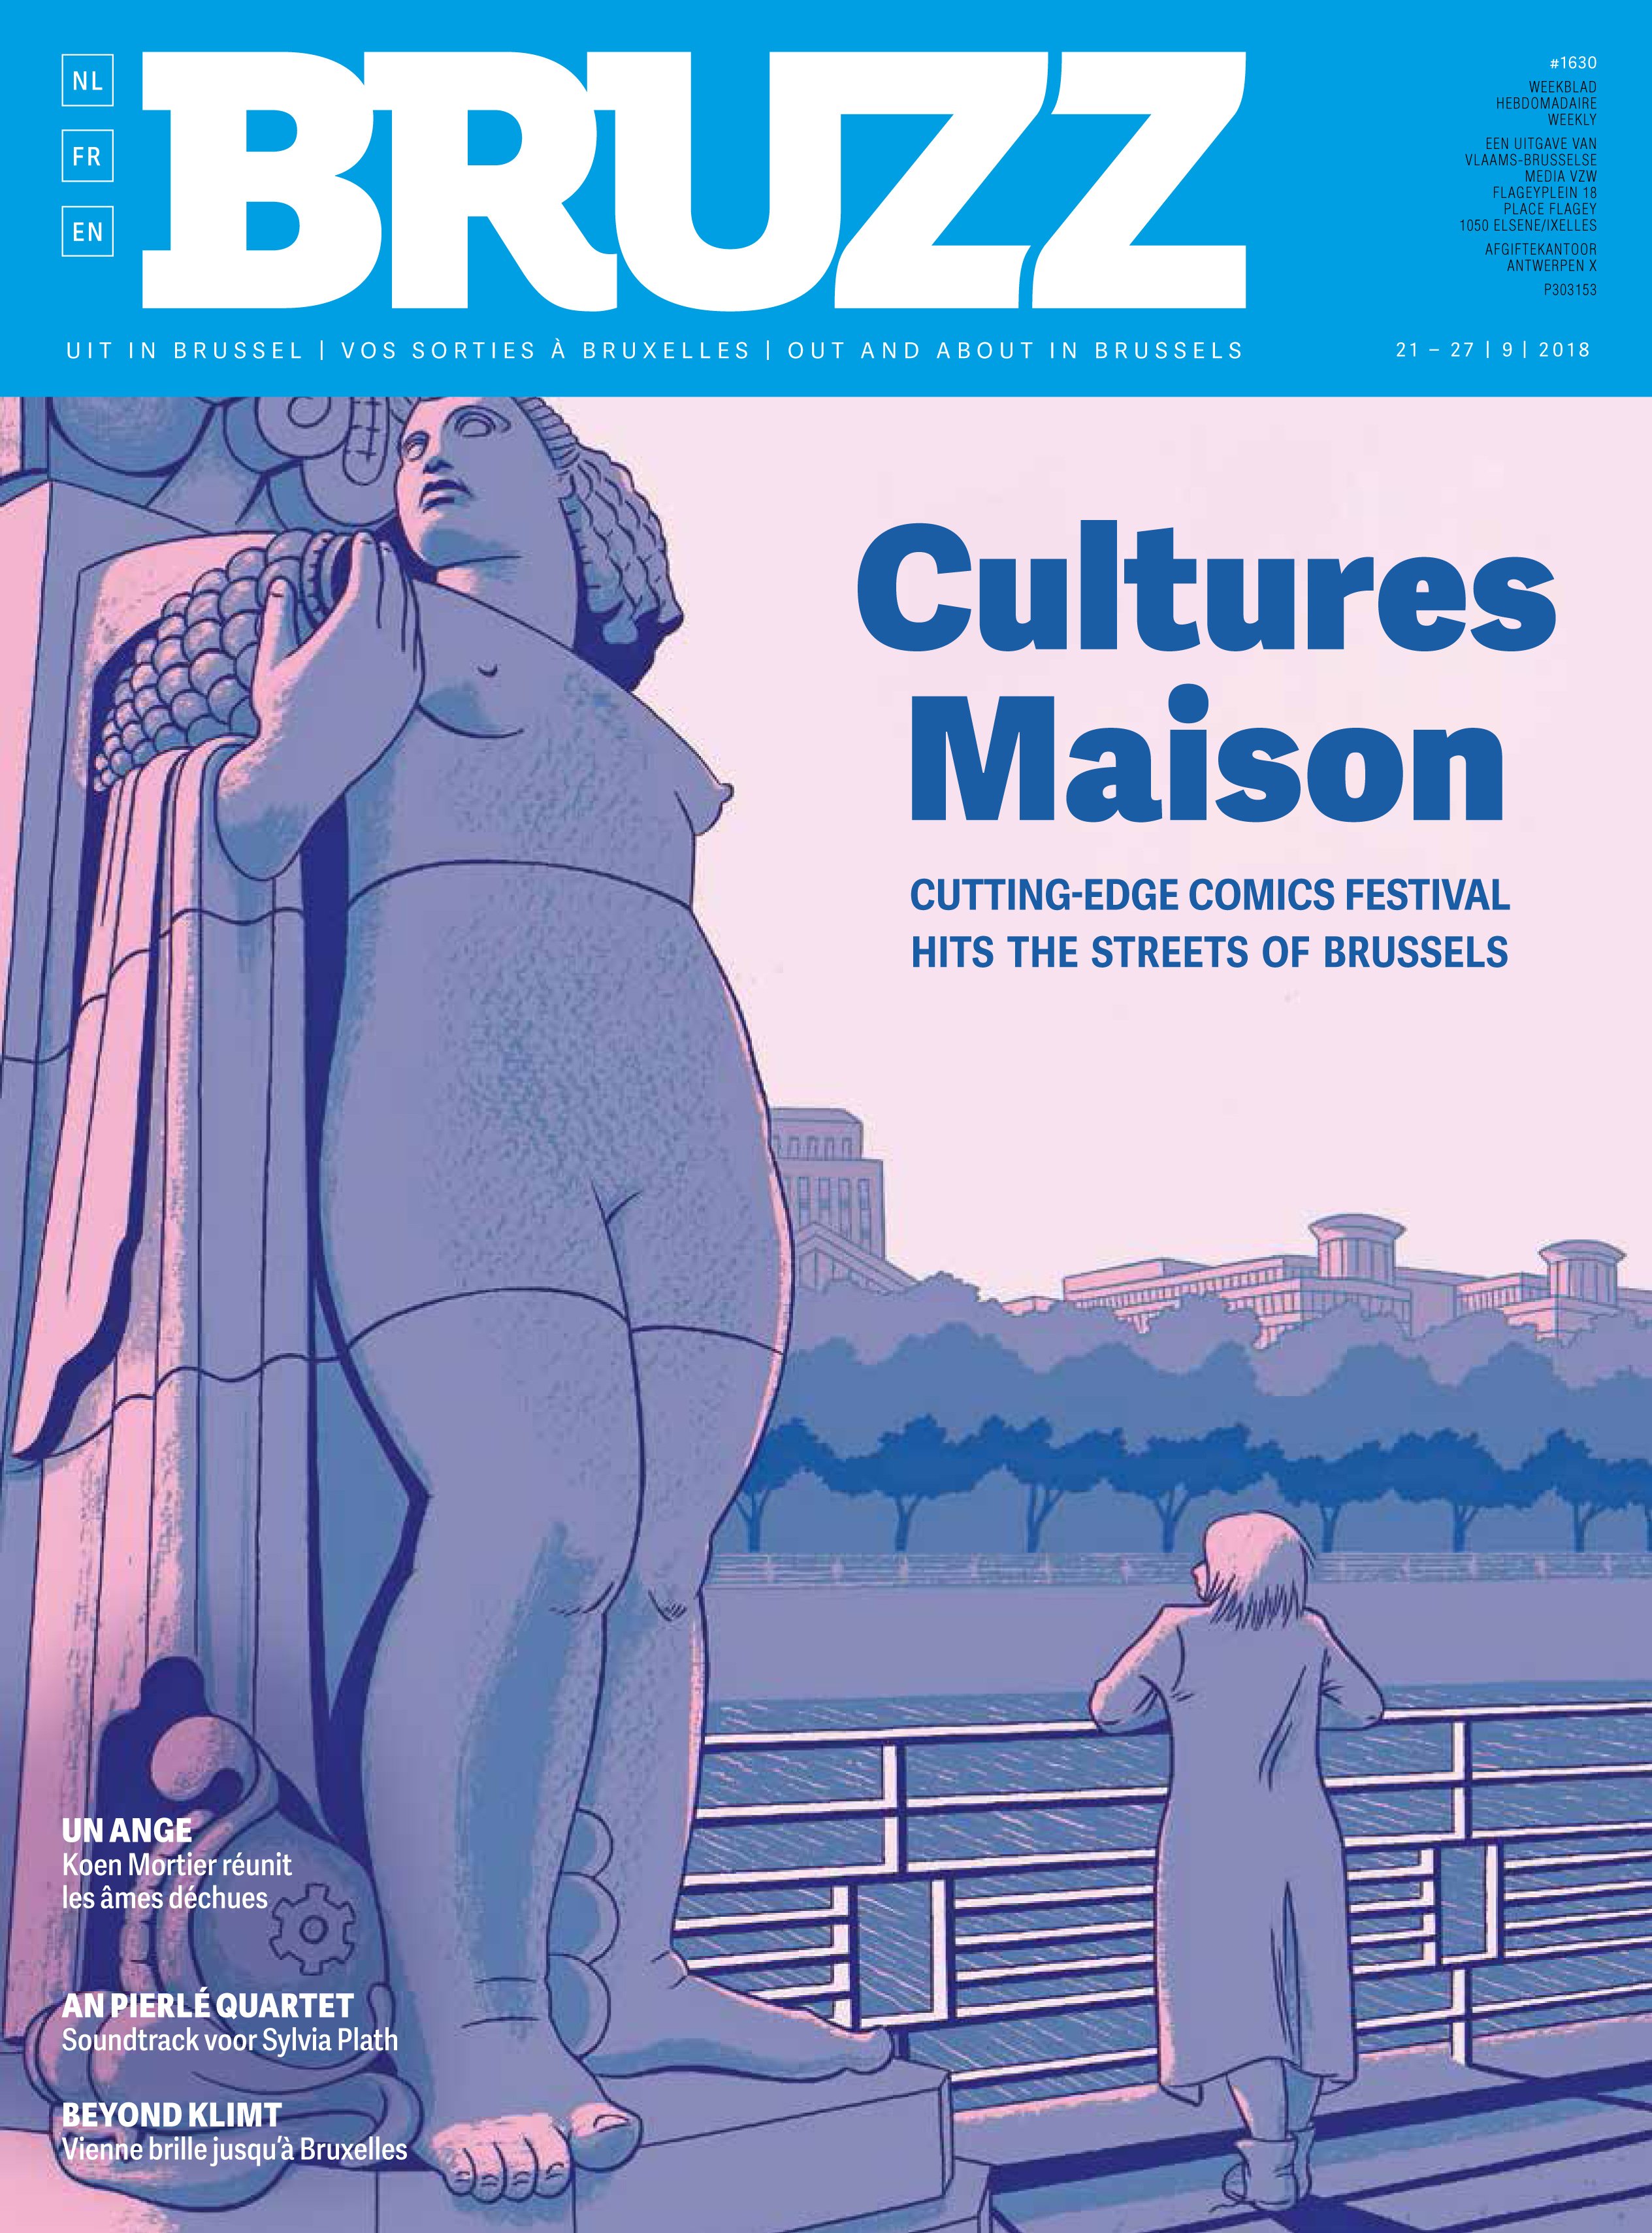 Downtown Baleinwalvis Luik Conundrum Press on Twitter: "Rebecca Rosen on the cover of @BRUZZbe for  launch of Flem in Brussels at @CULTURESMAISON! https://t.co/8VHILjIvNe  https://t.co/XWKYd7DcnZ" / Twitter